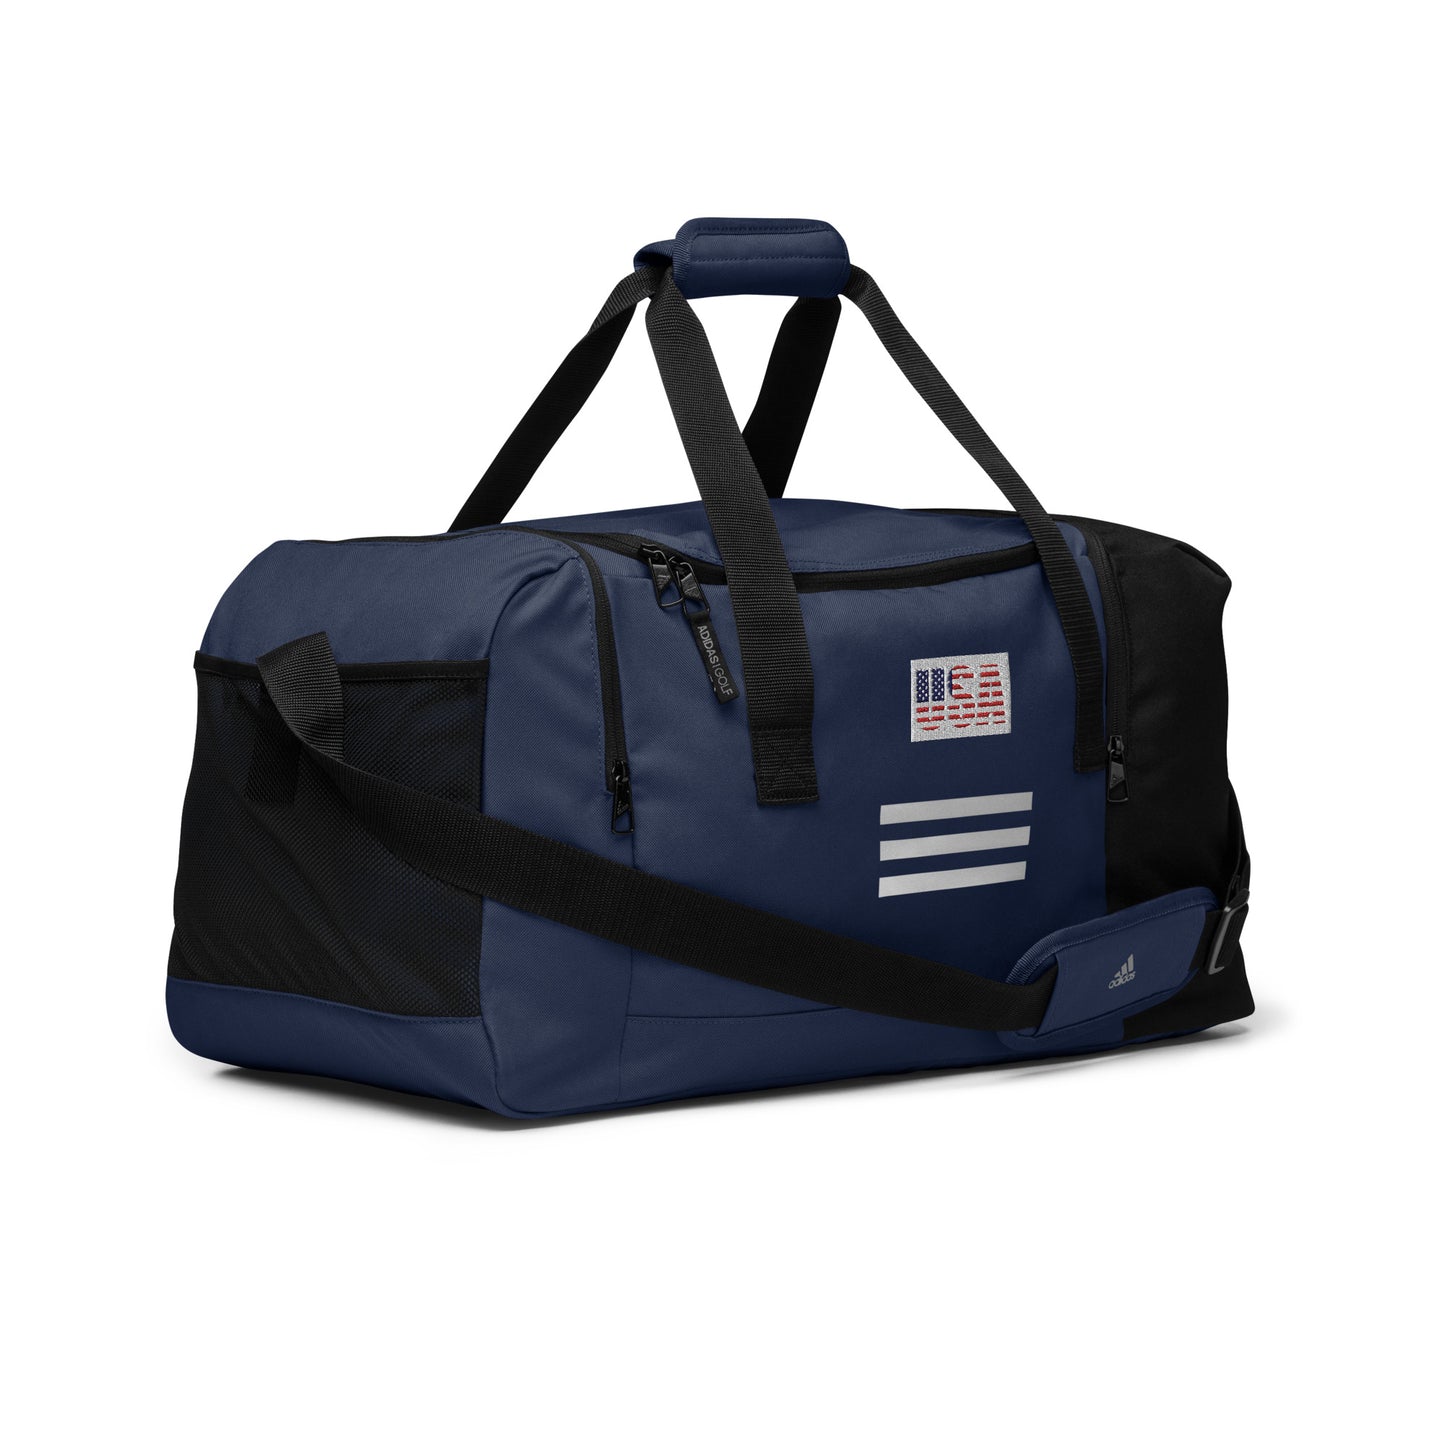 adidas duffle bag with USA flag logo design (shipping to US, Canada & Europe)